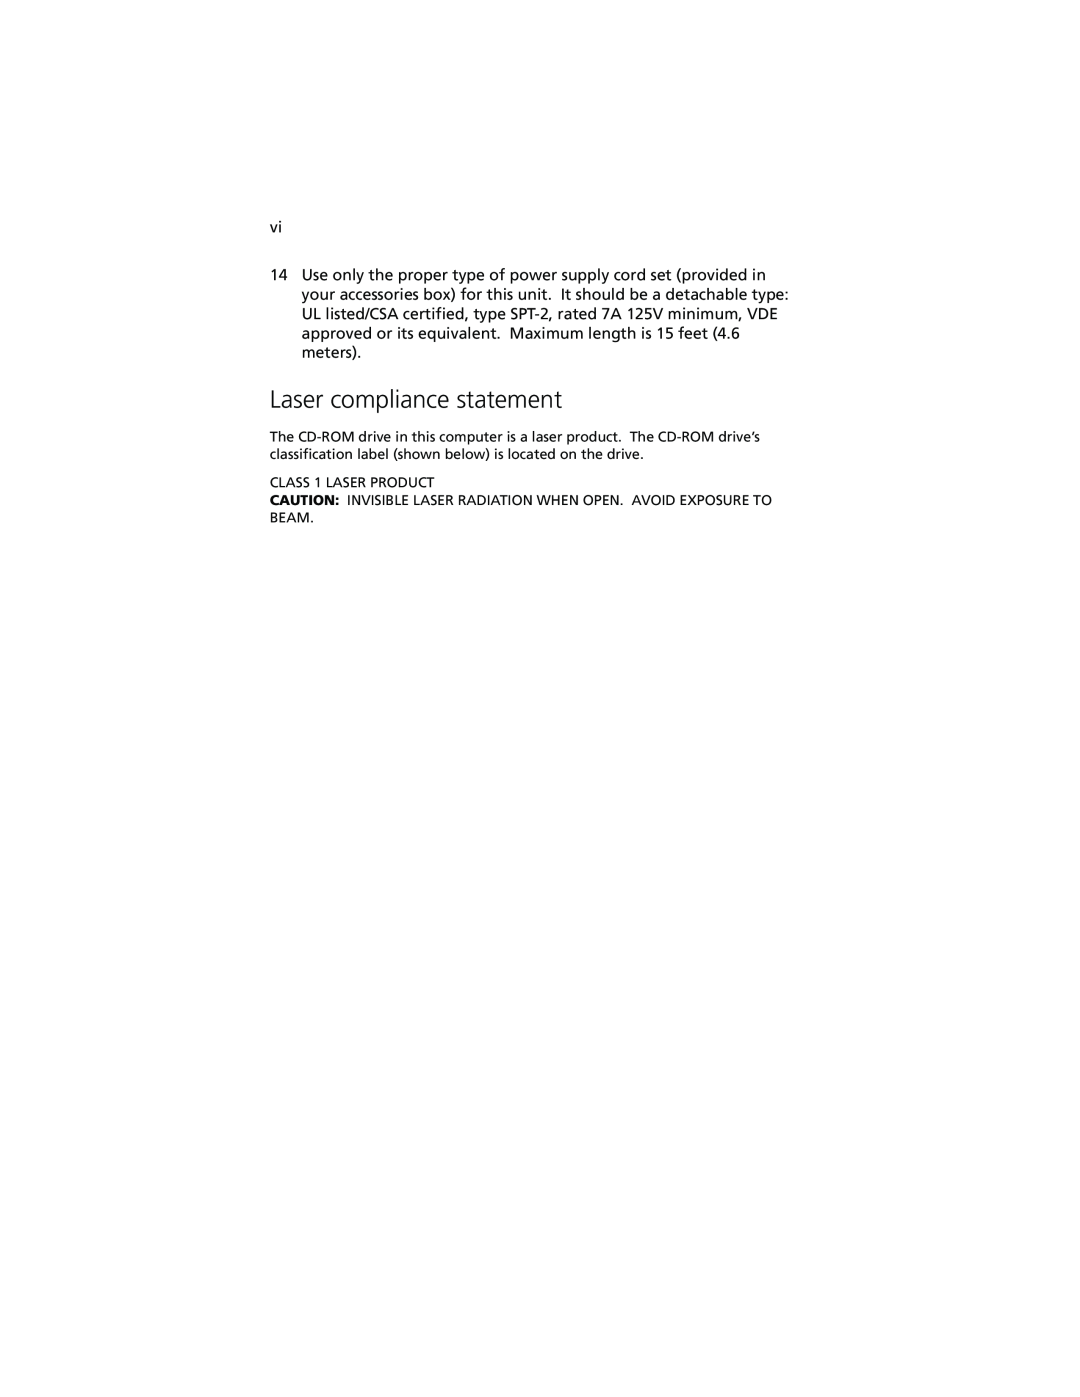 Acer Altos G610 manual Laser compliance statement 